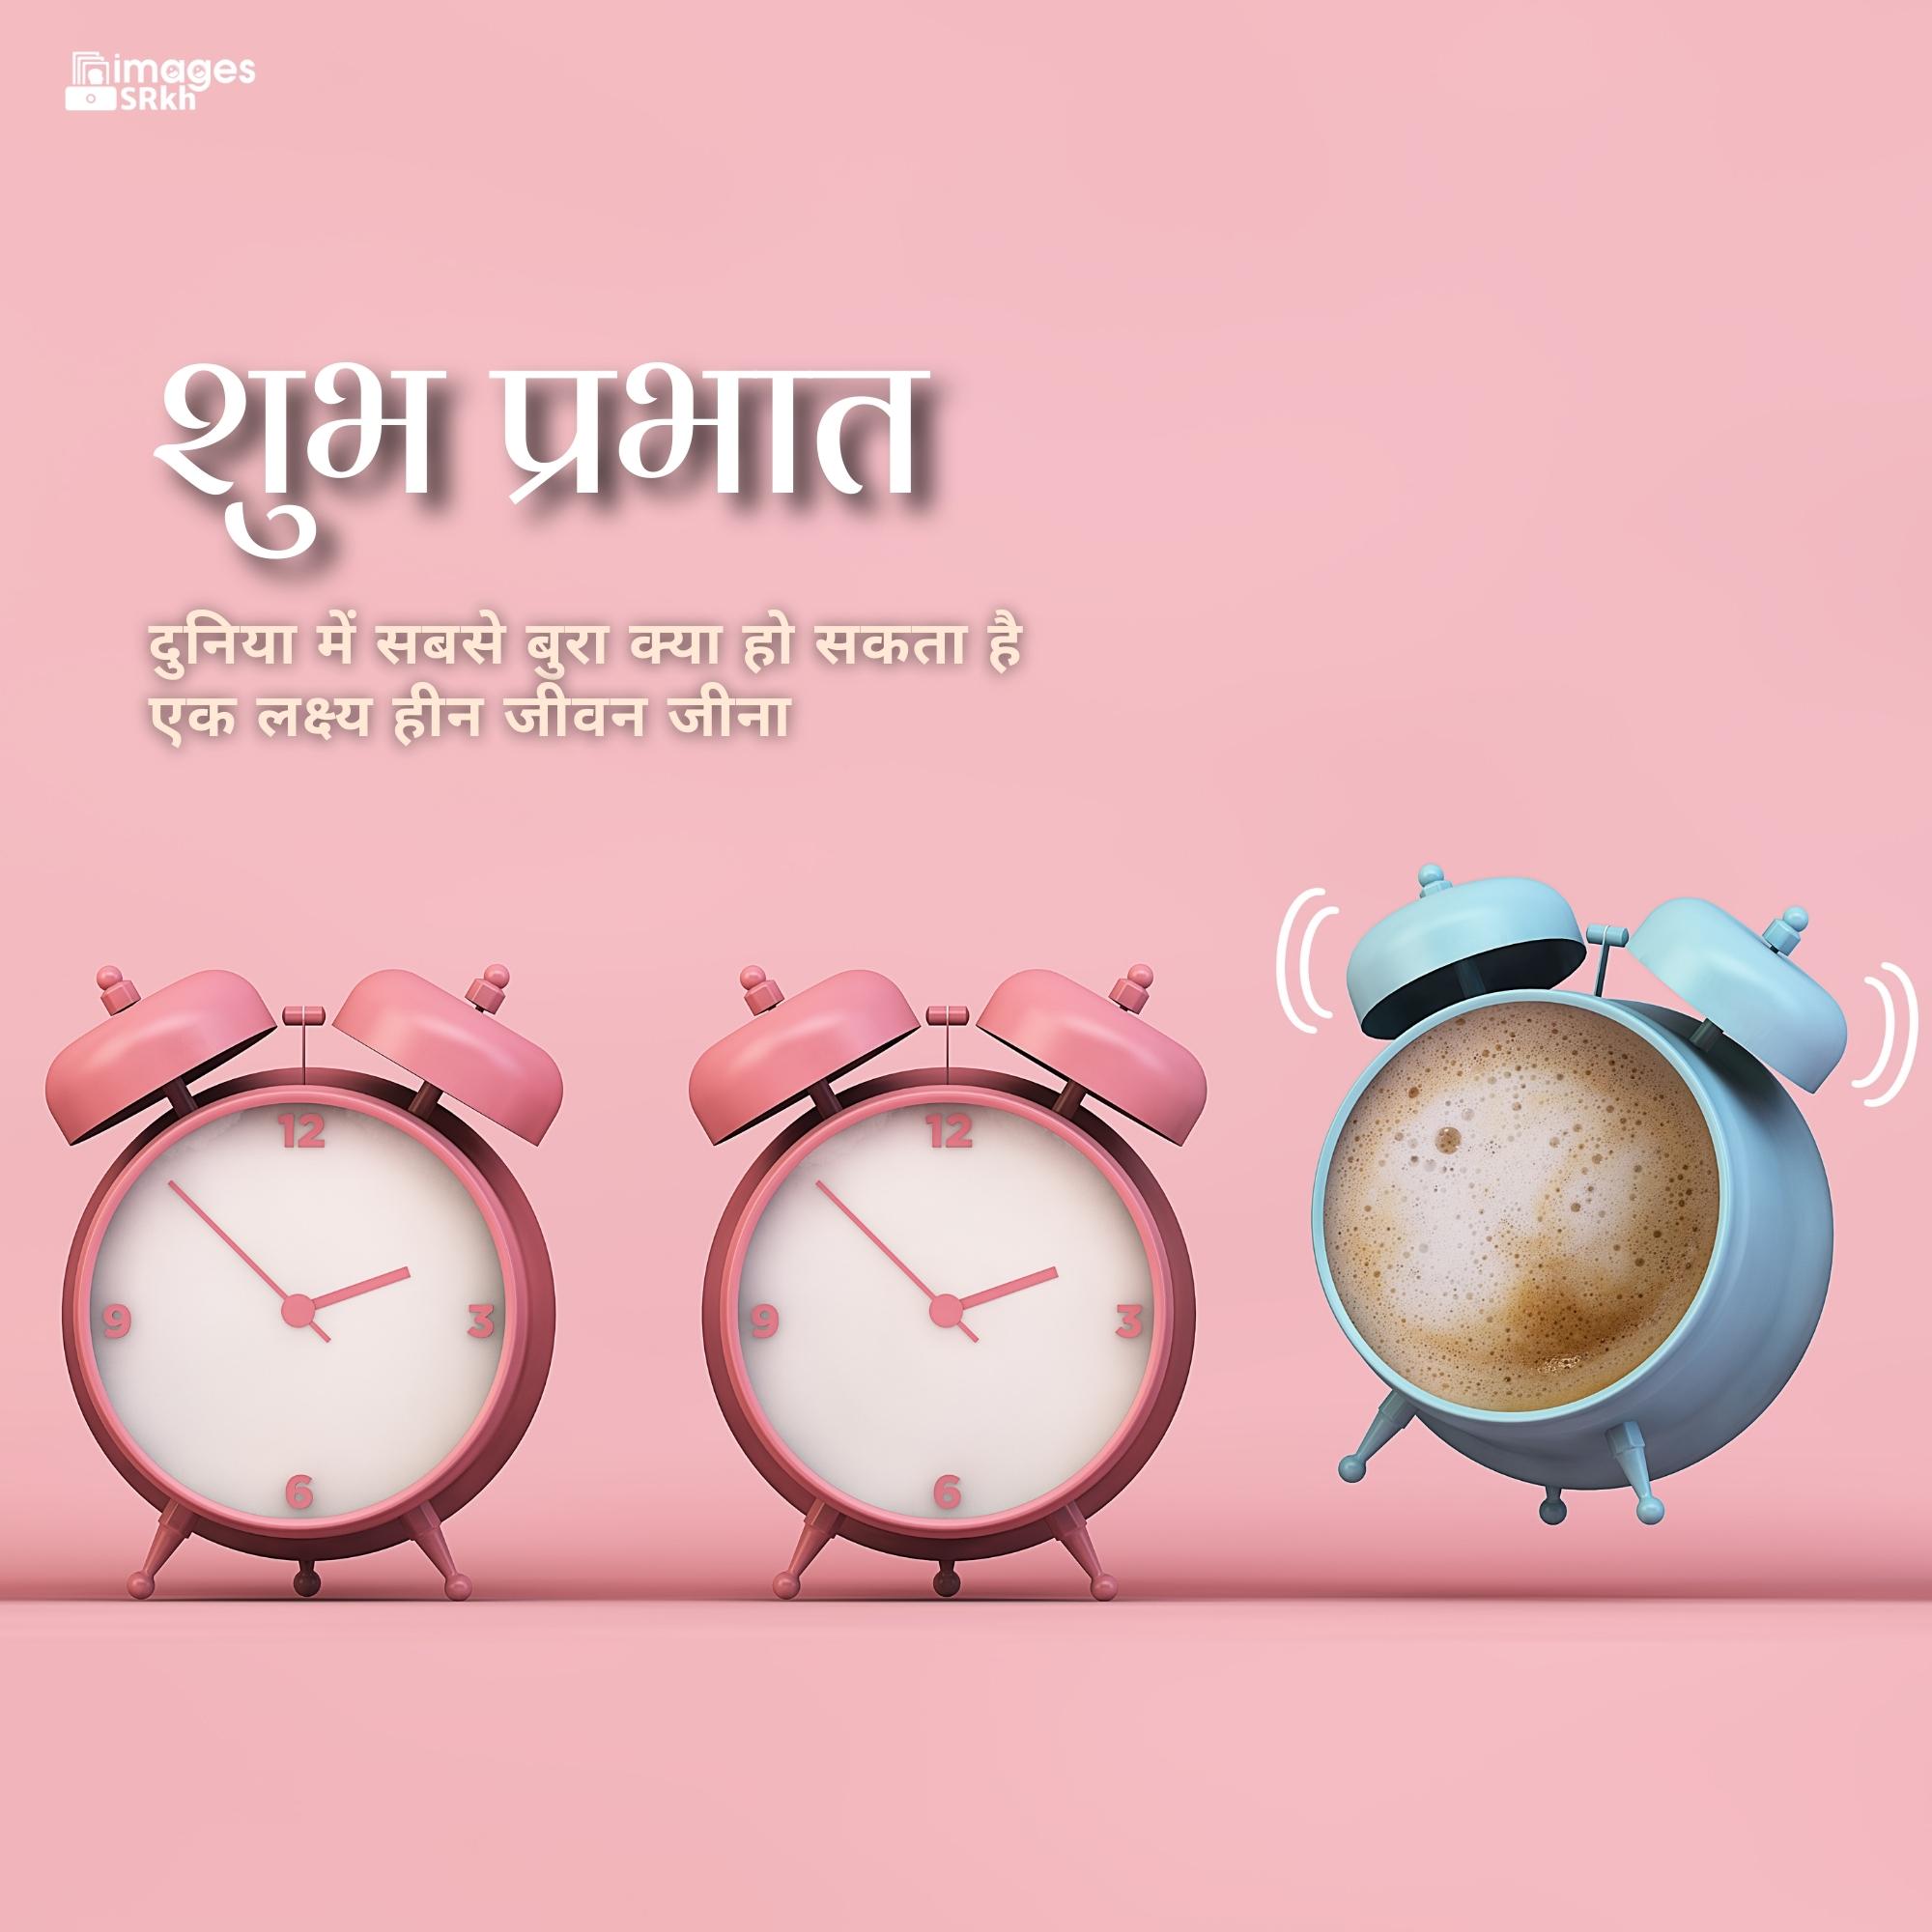 Thought Hindi Good Morning hd Images download